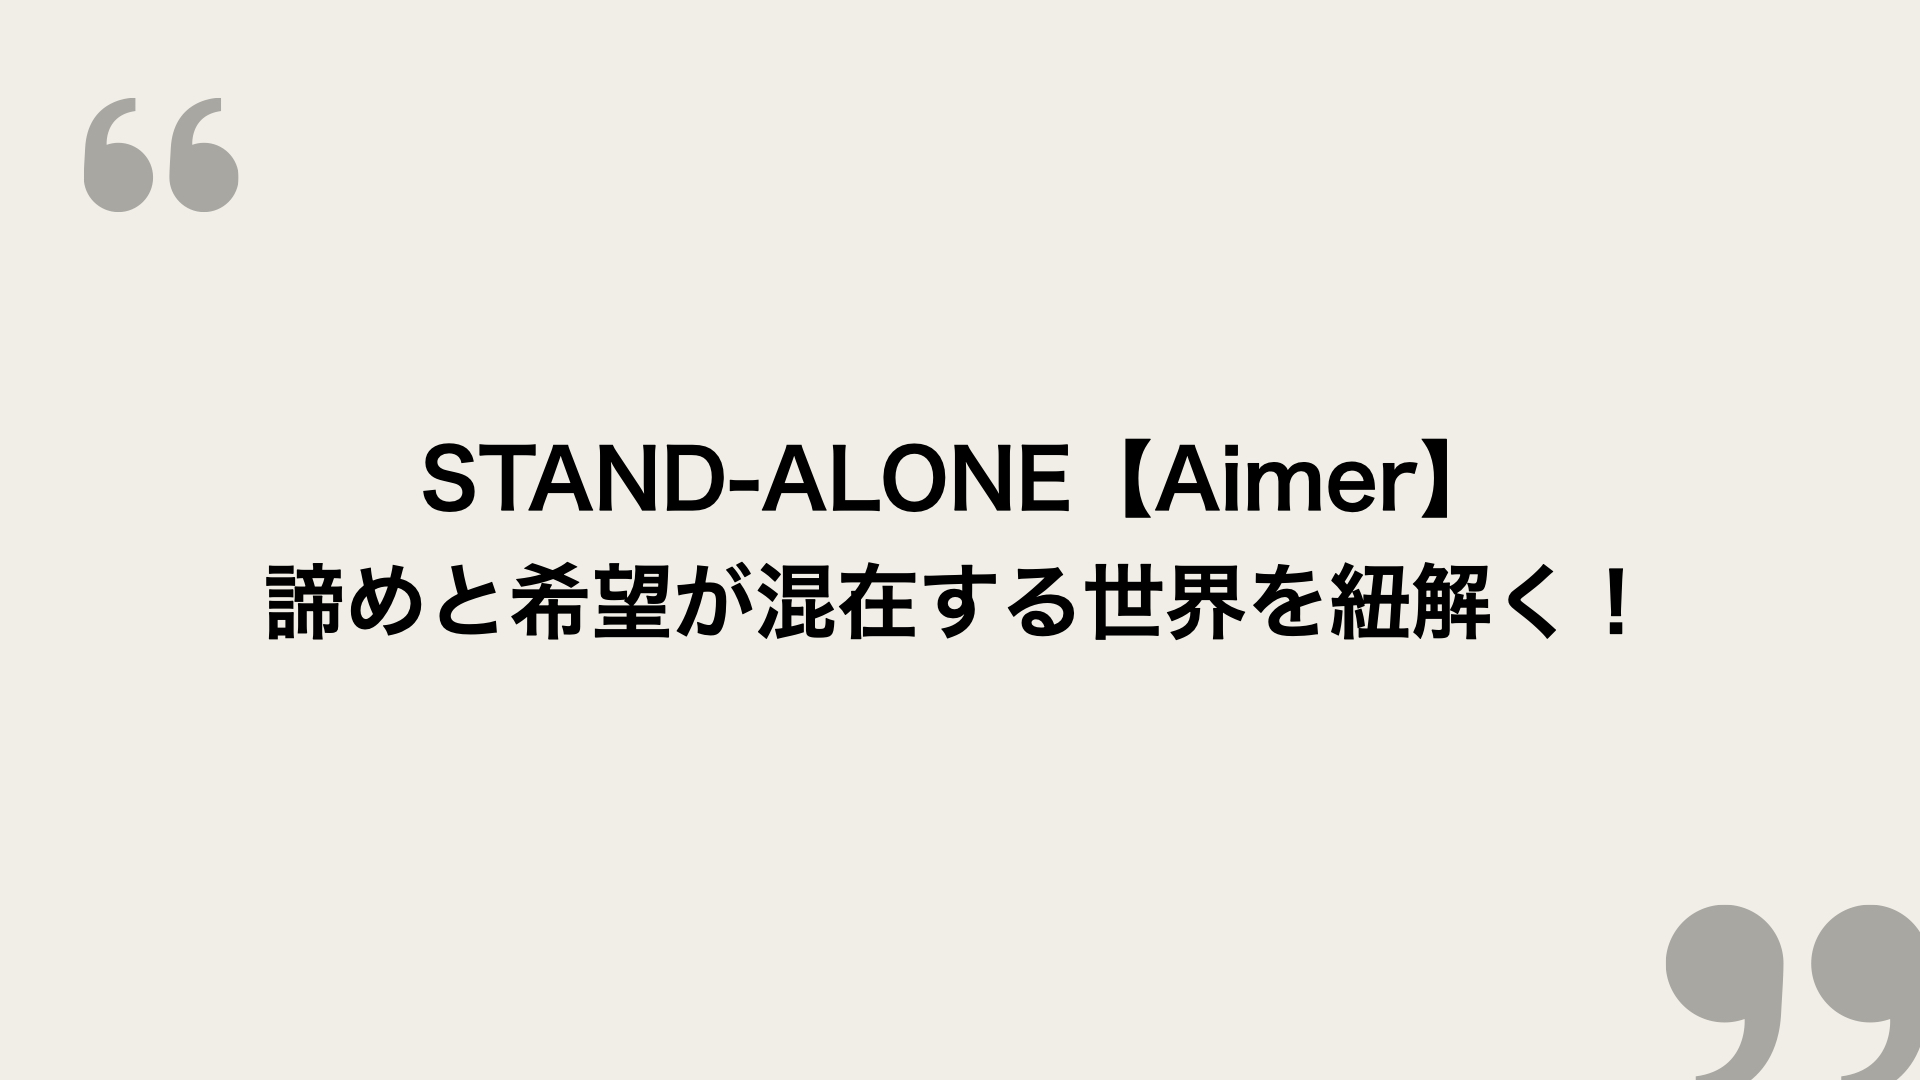 Stand Alone Aimer 歌詞の意味を考察 諦めと希望が混在する世界を紐解く Framu Media